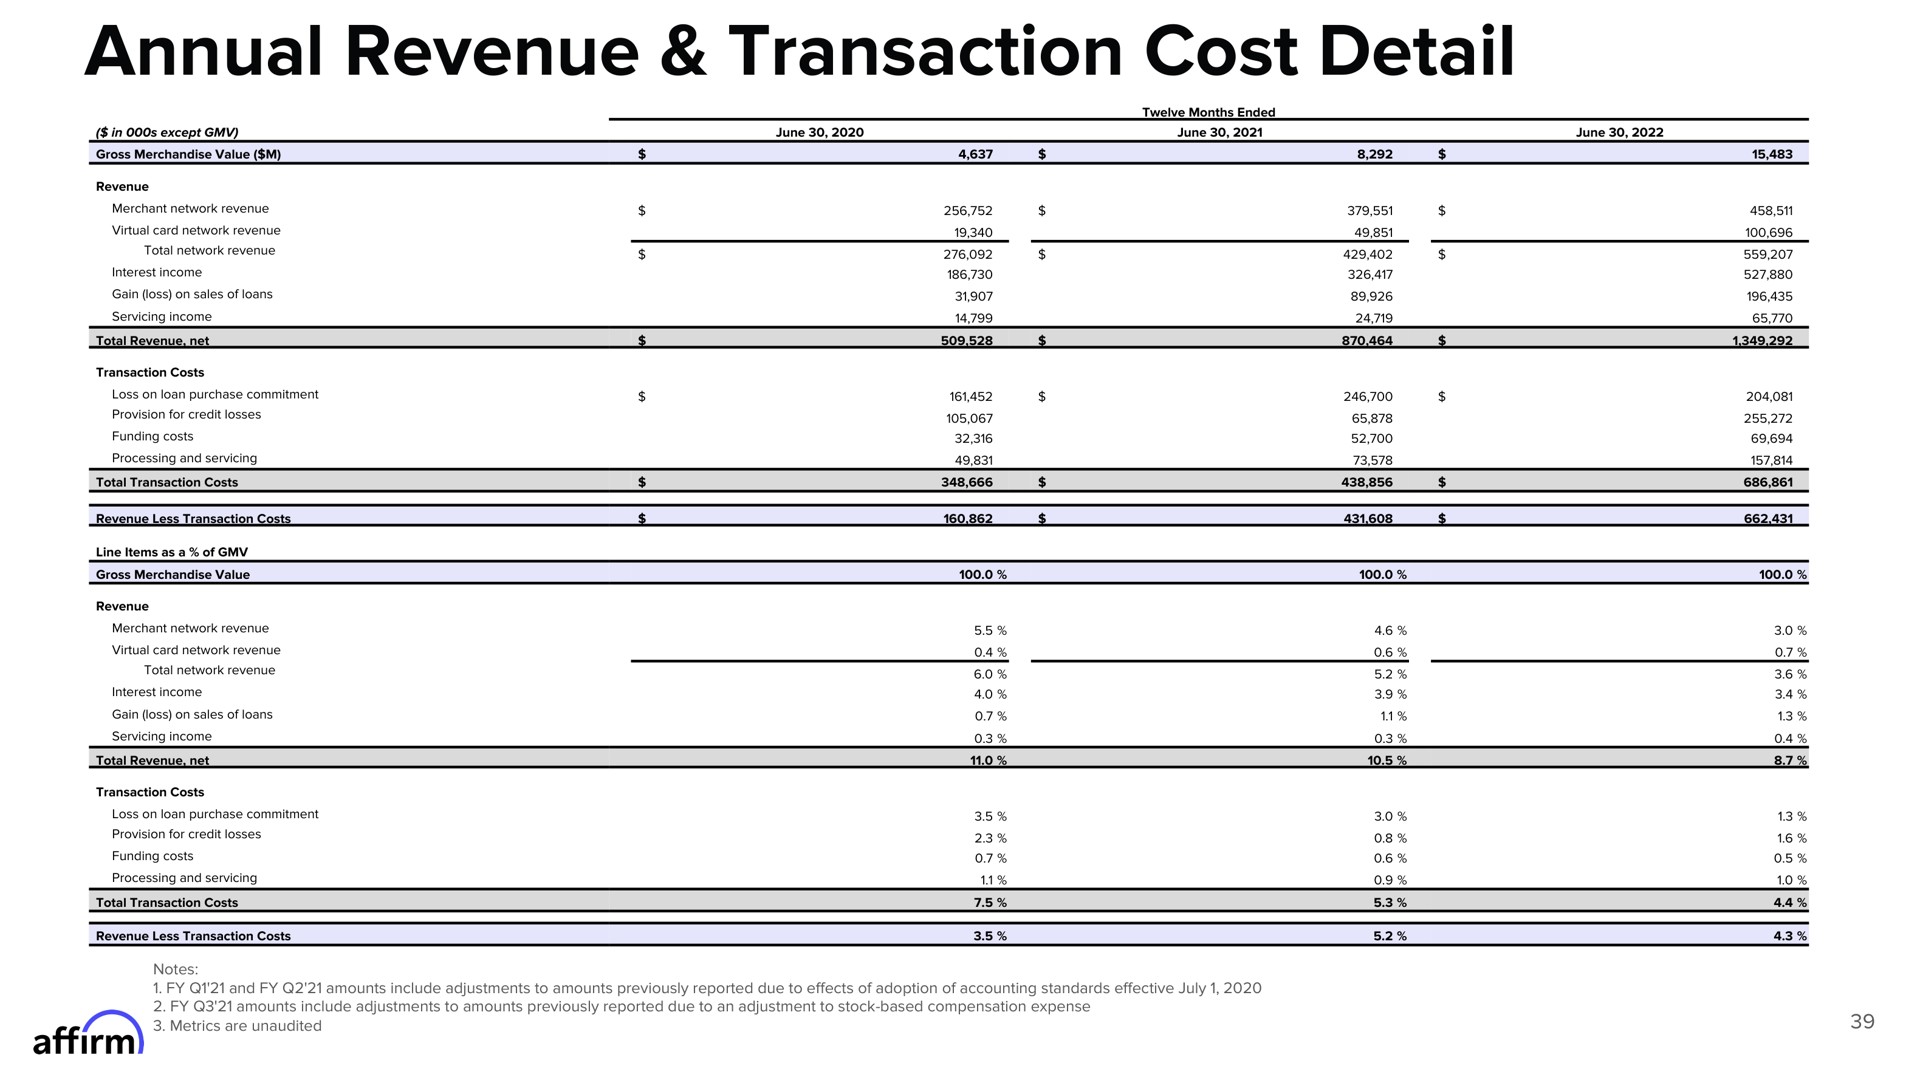 annual revenue transaction cost detail affirm | Affirm